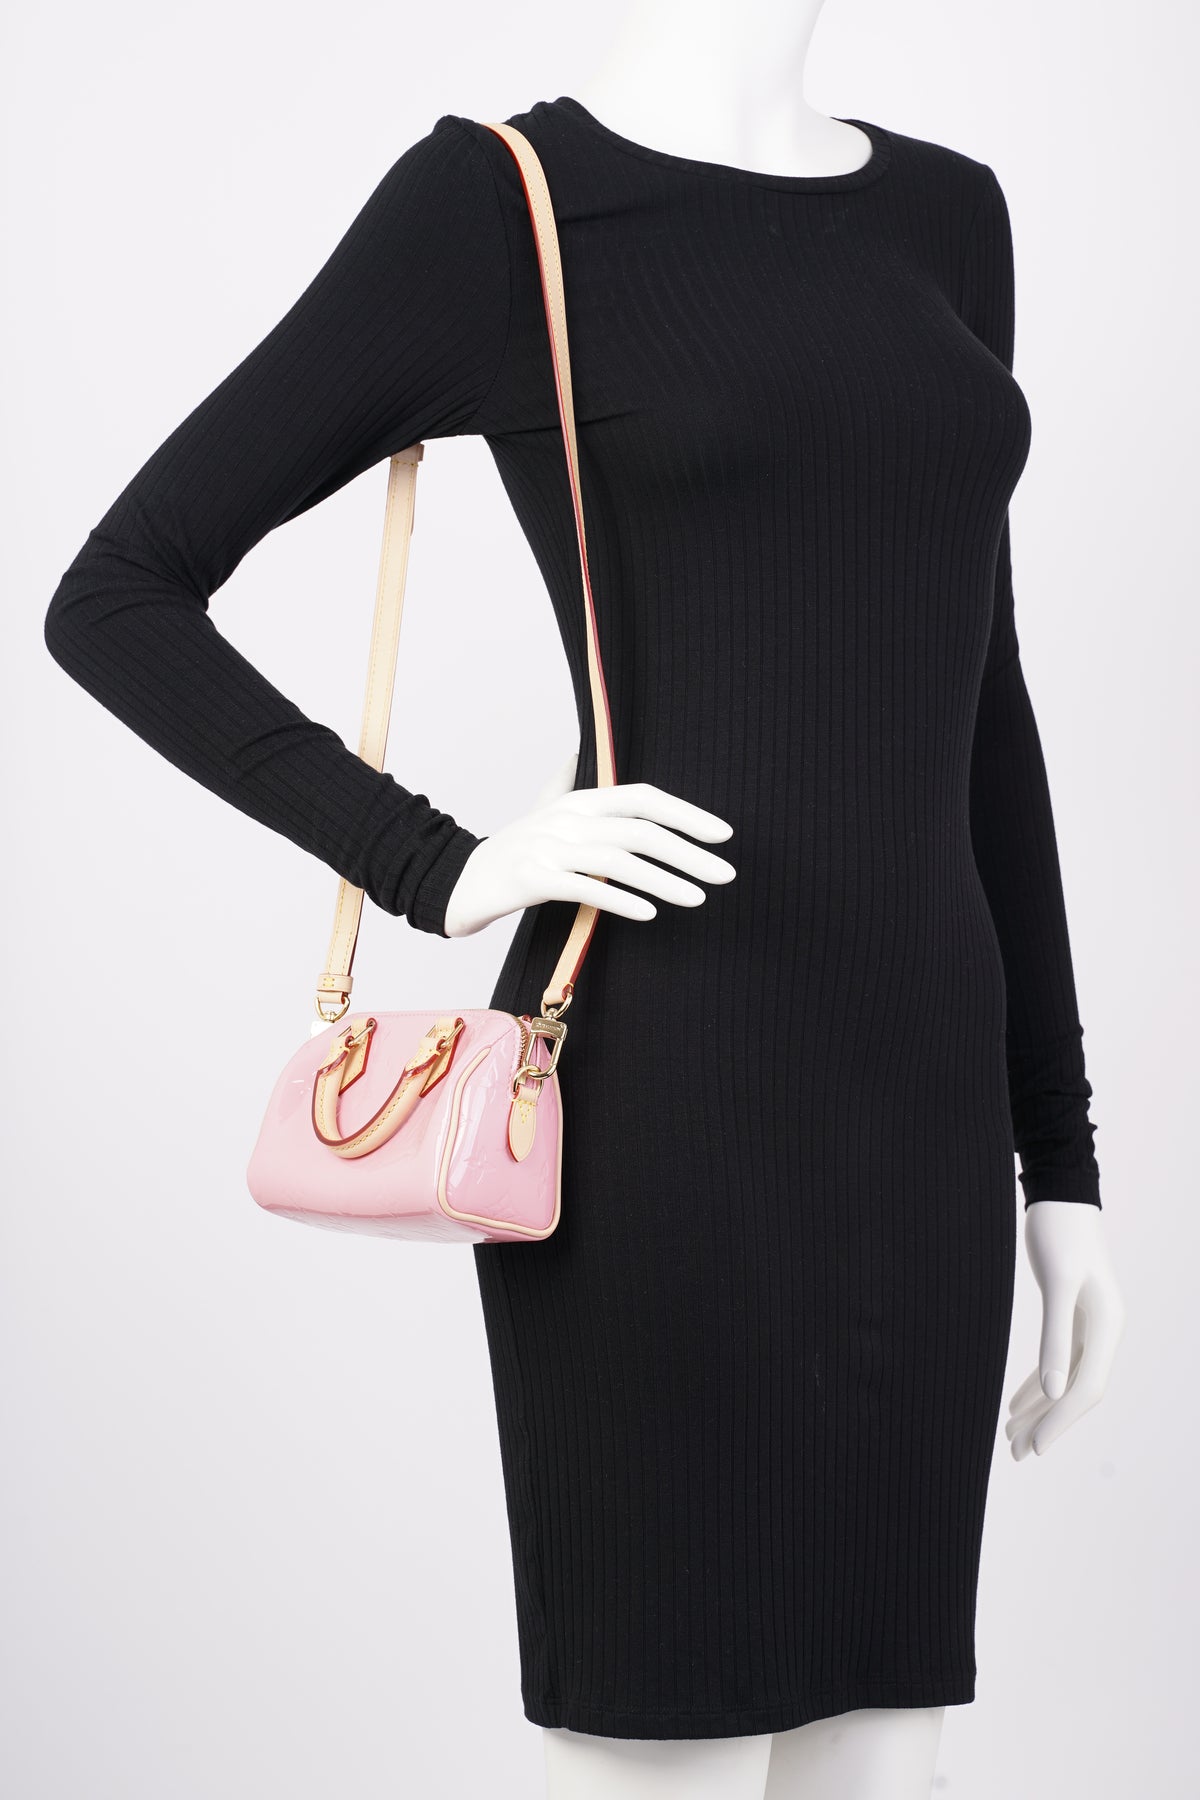 Shop Louis Vuitton Louis Vuitton Nano Speedy Mochi Pink handbag